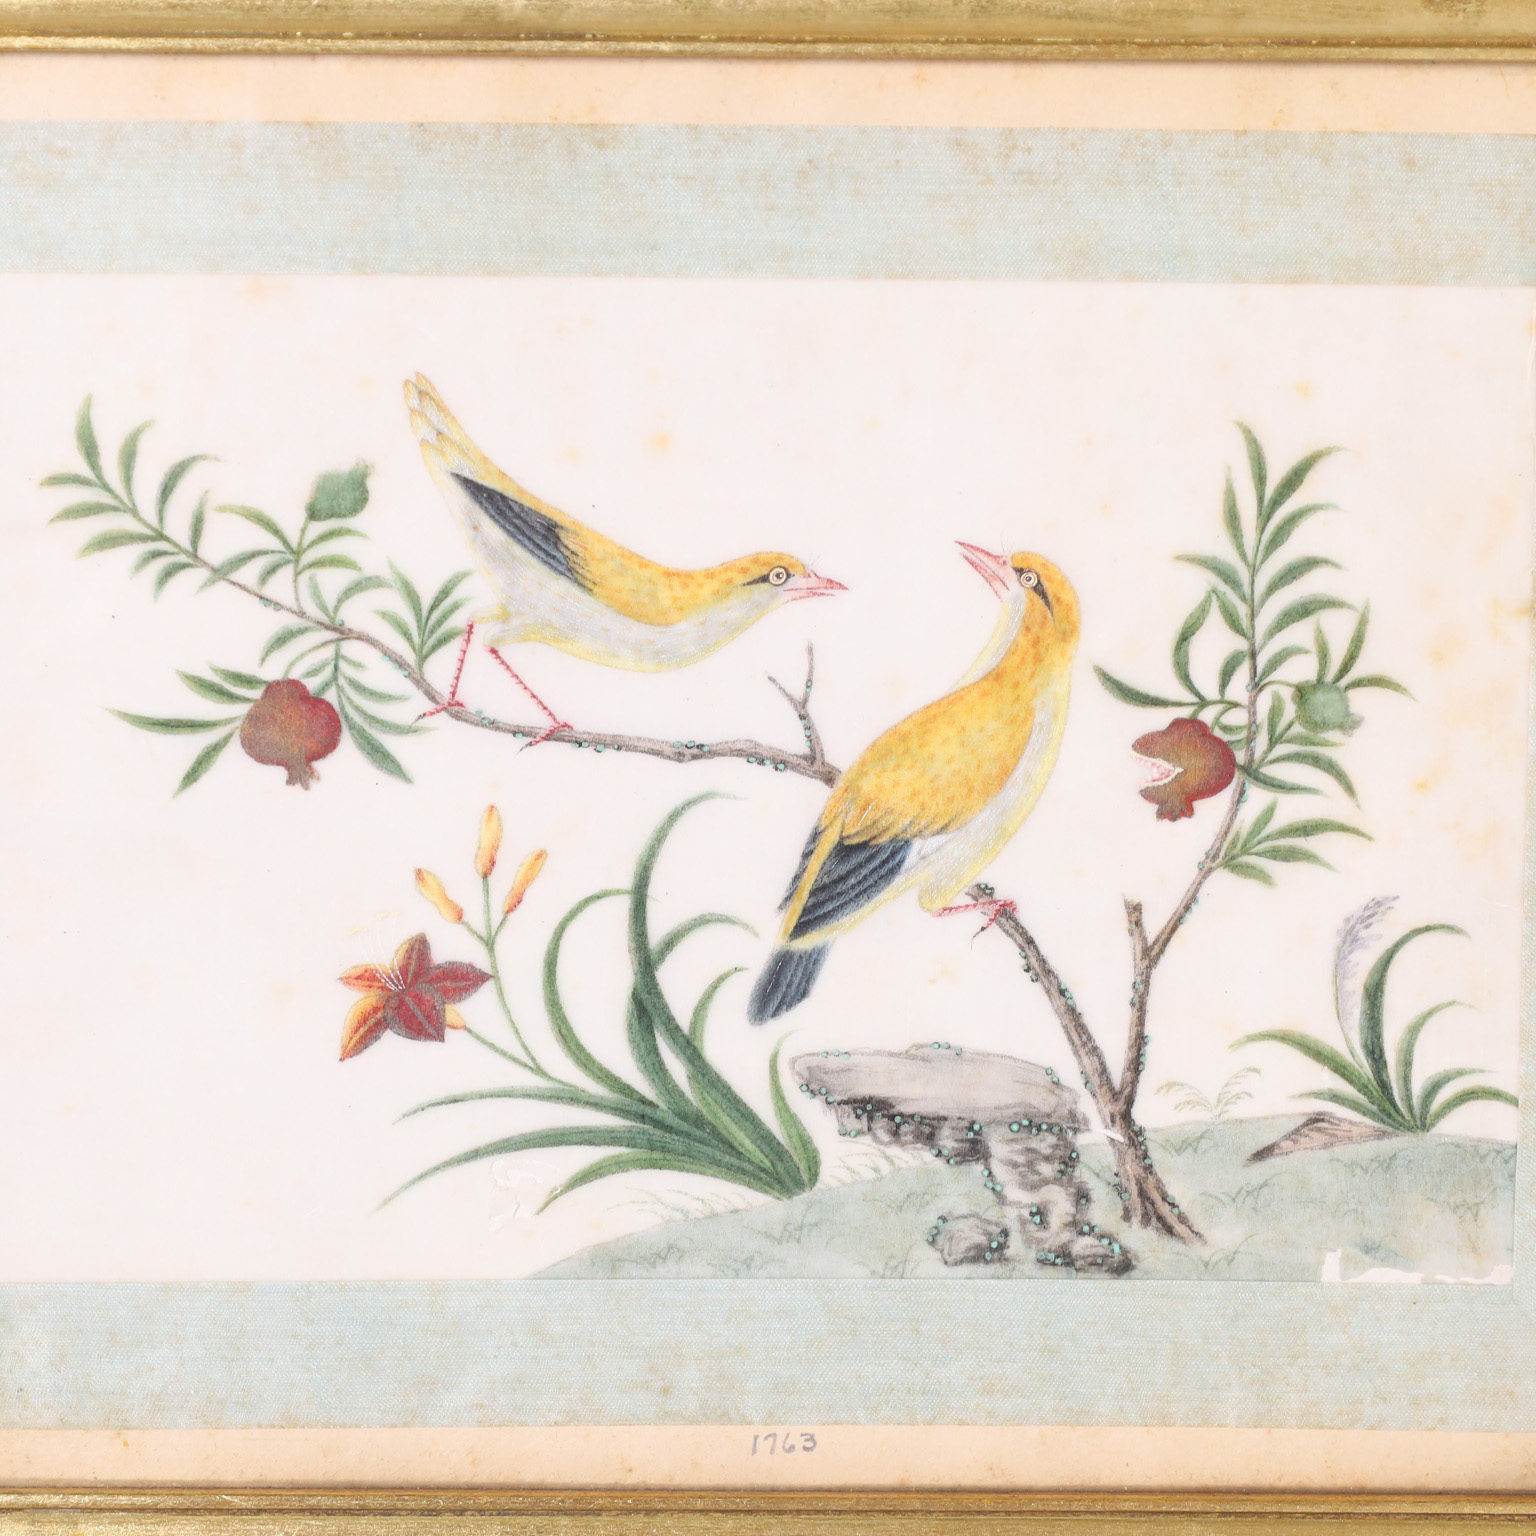 Set of Eight Antique Japanese Bird Paintings